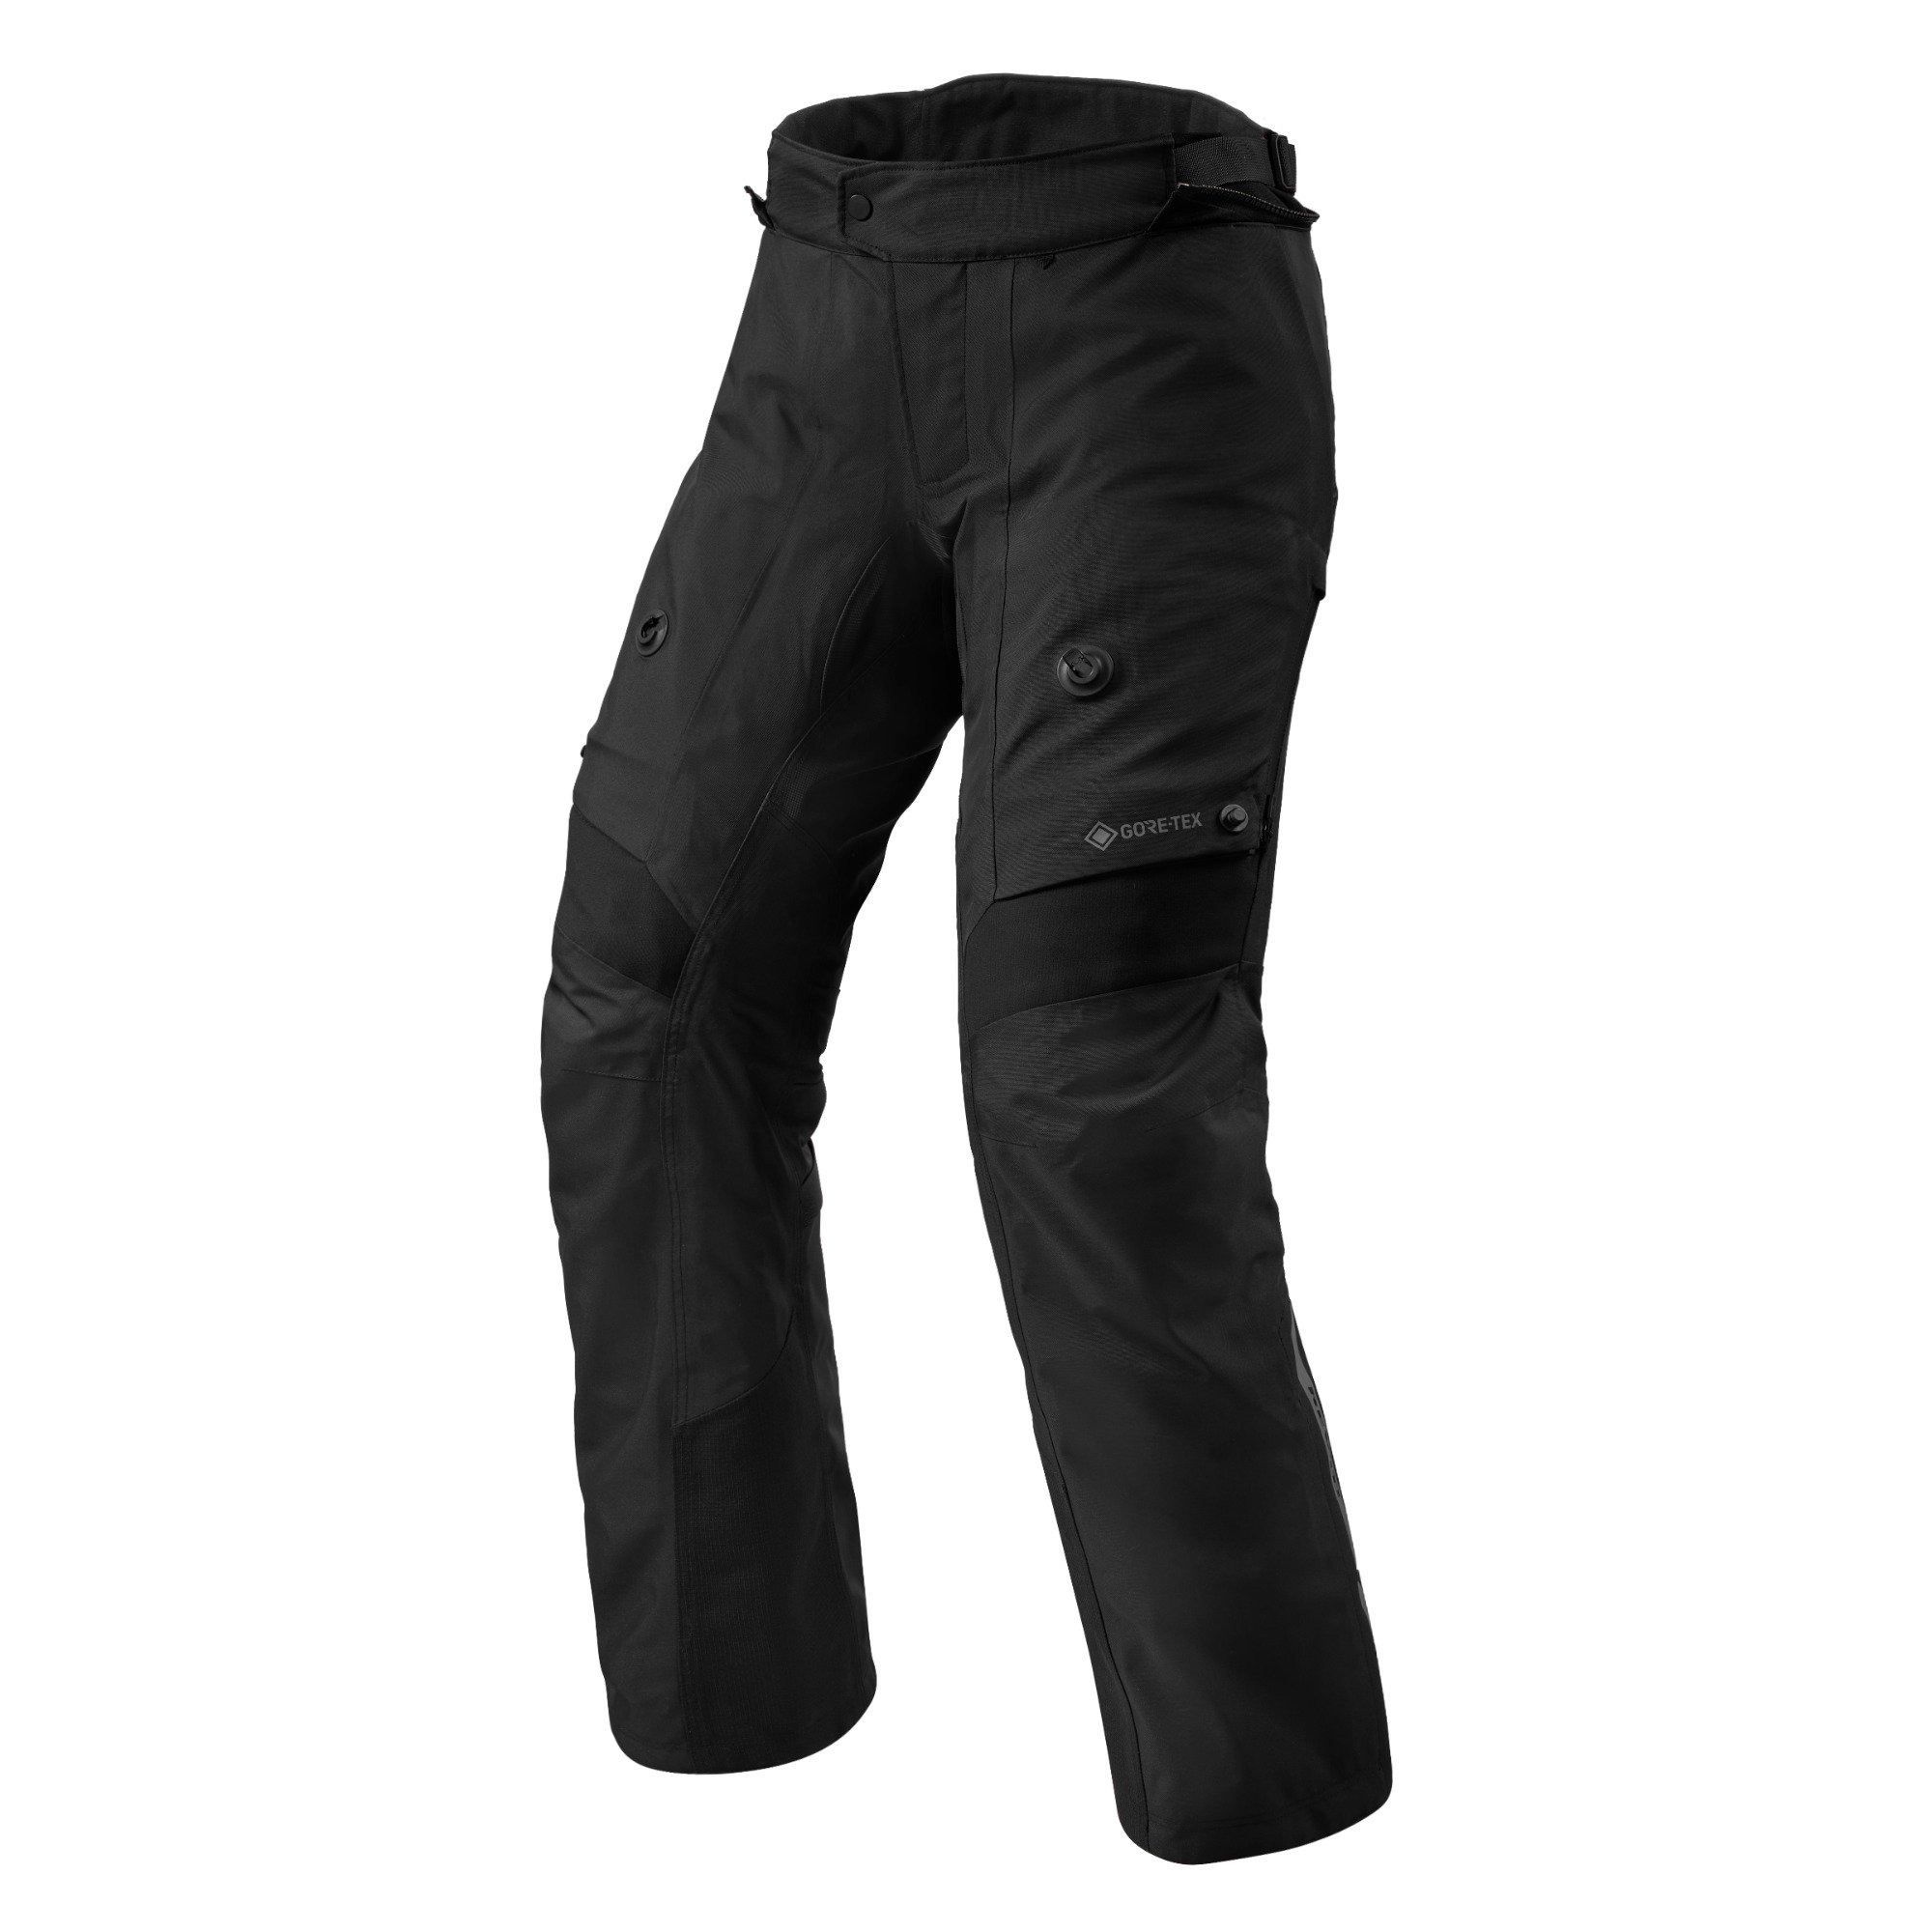 Image of REV'IT! Pants Poseidon 3 GTX Black Long Motorcycle Pants Size M ID 8700001362542